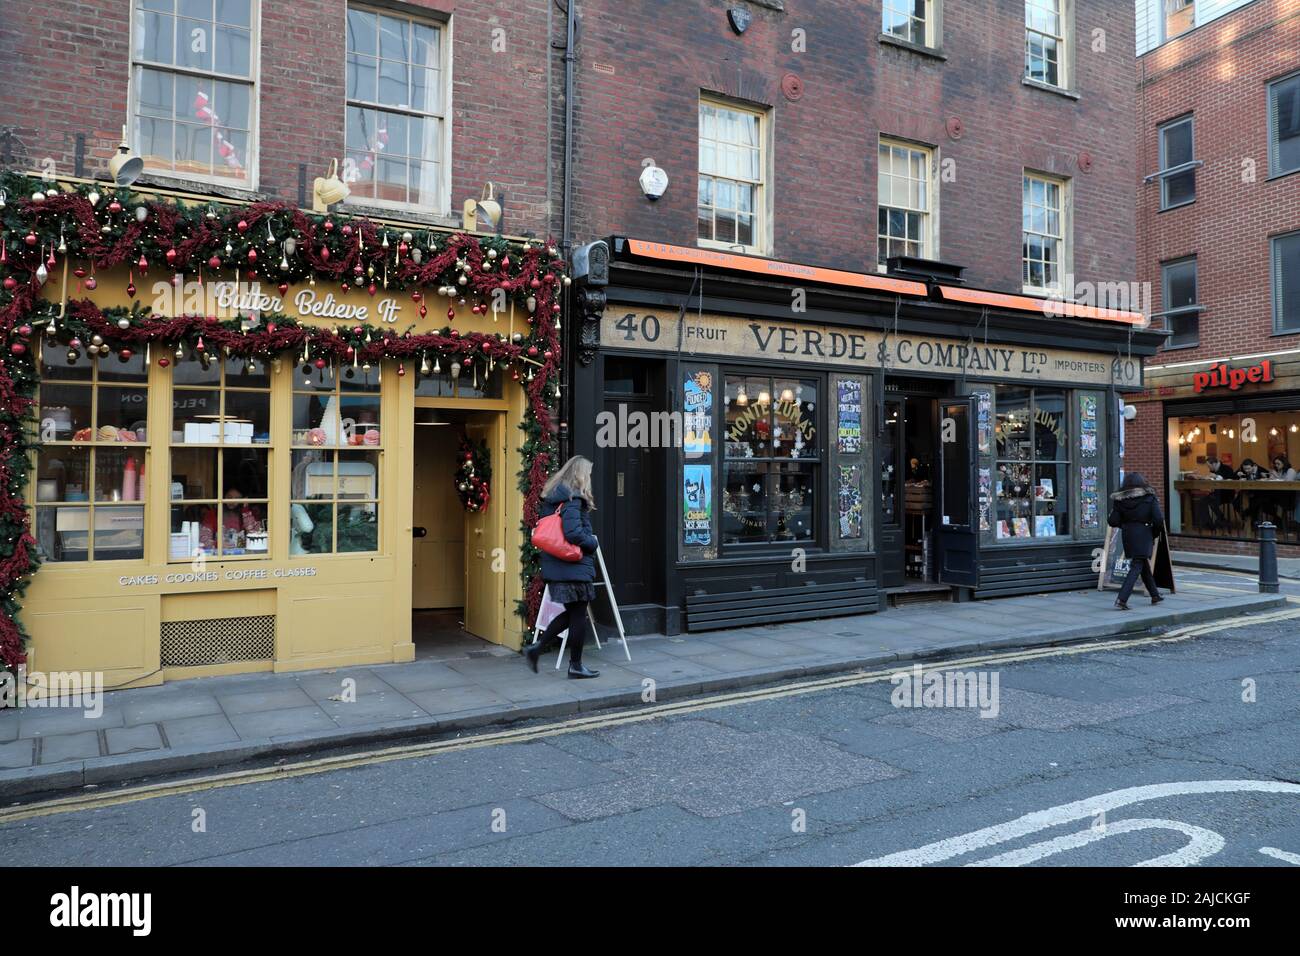 Butter Believe It bakery & Verde & Company shopfront with Christmas decorations in Spitalfields East London E1 England UK  KATHY DEWITT Stock Photo